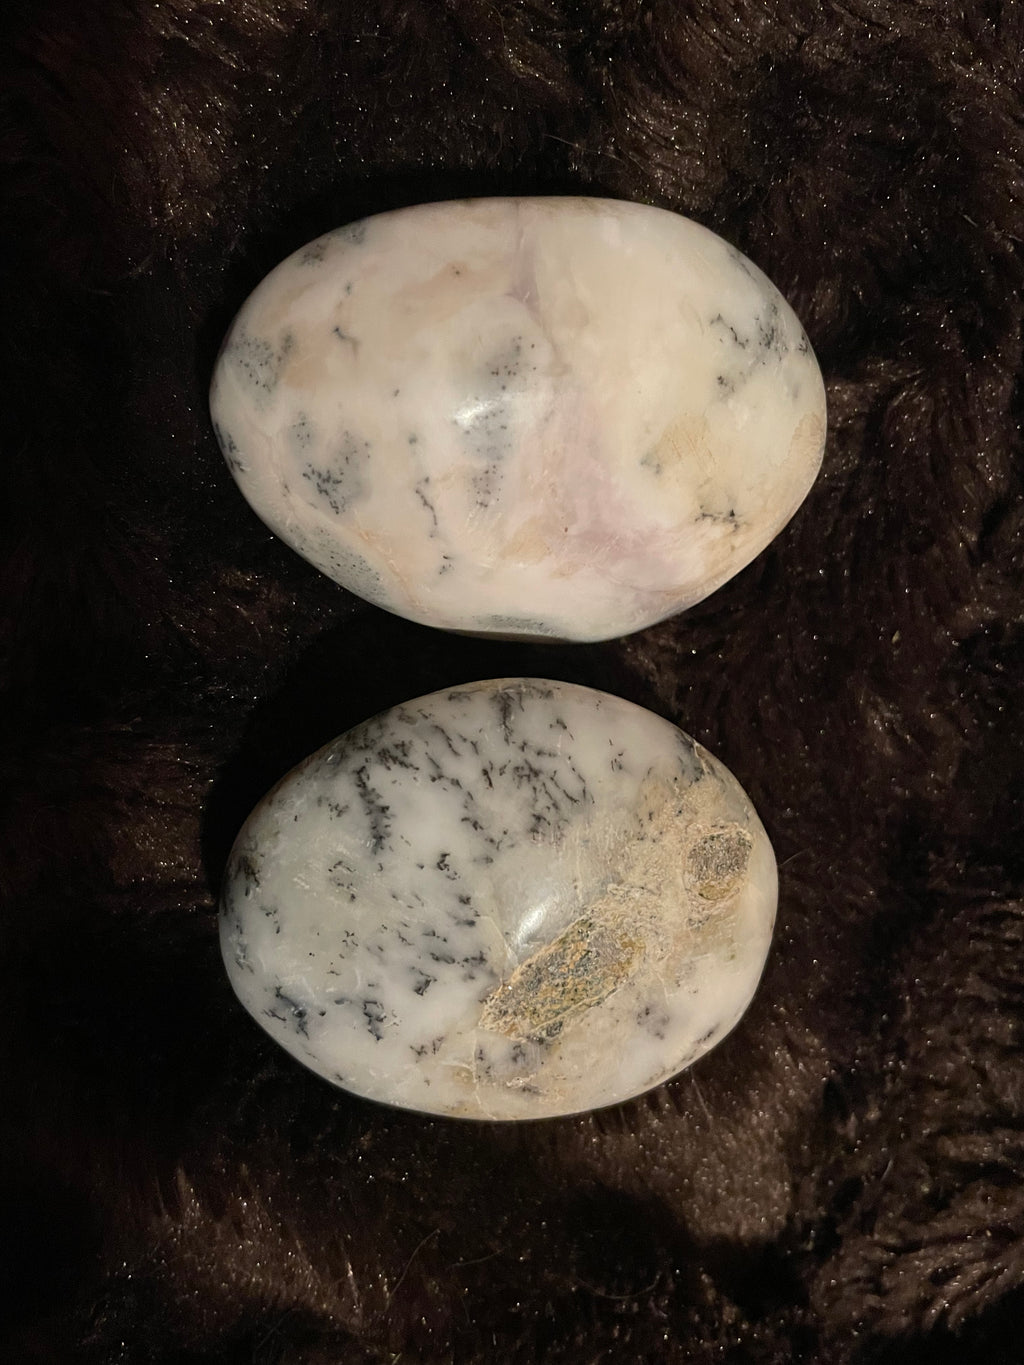 Dendritic Opal Palm Stone